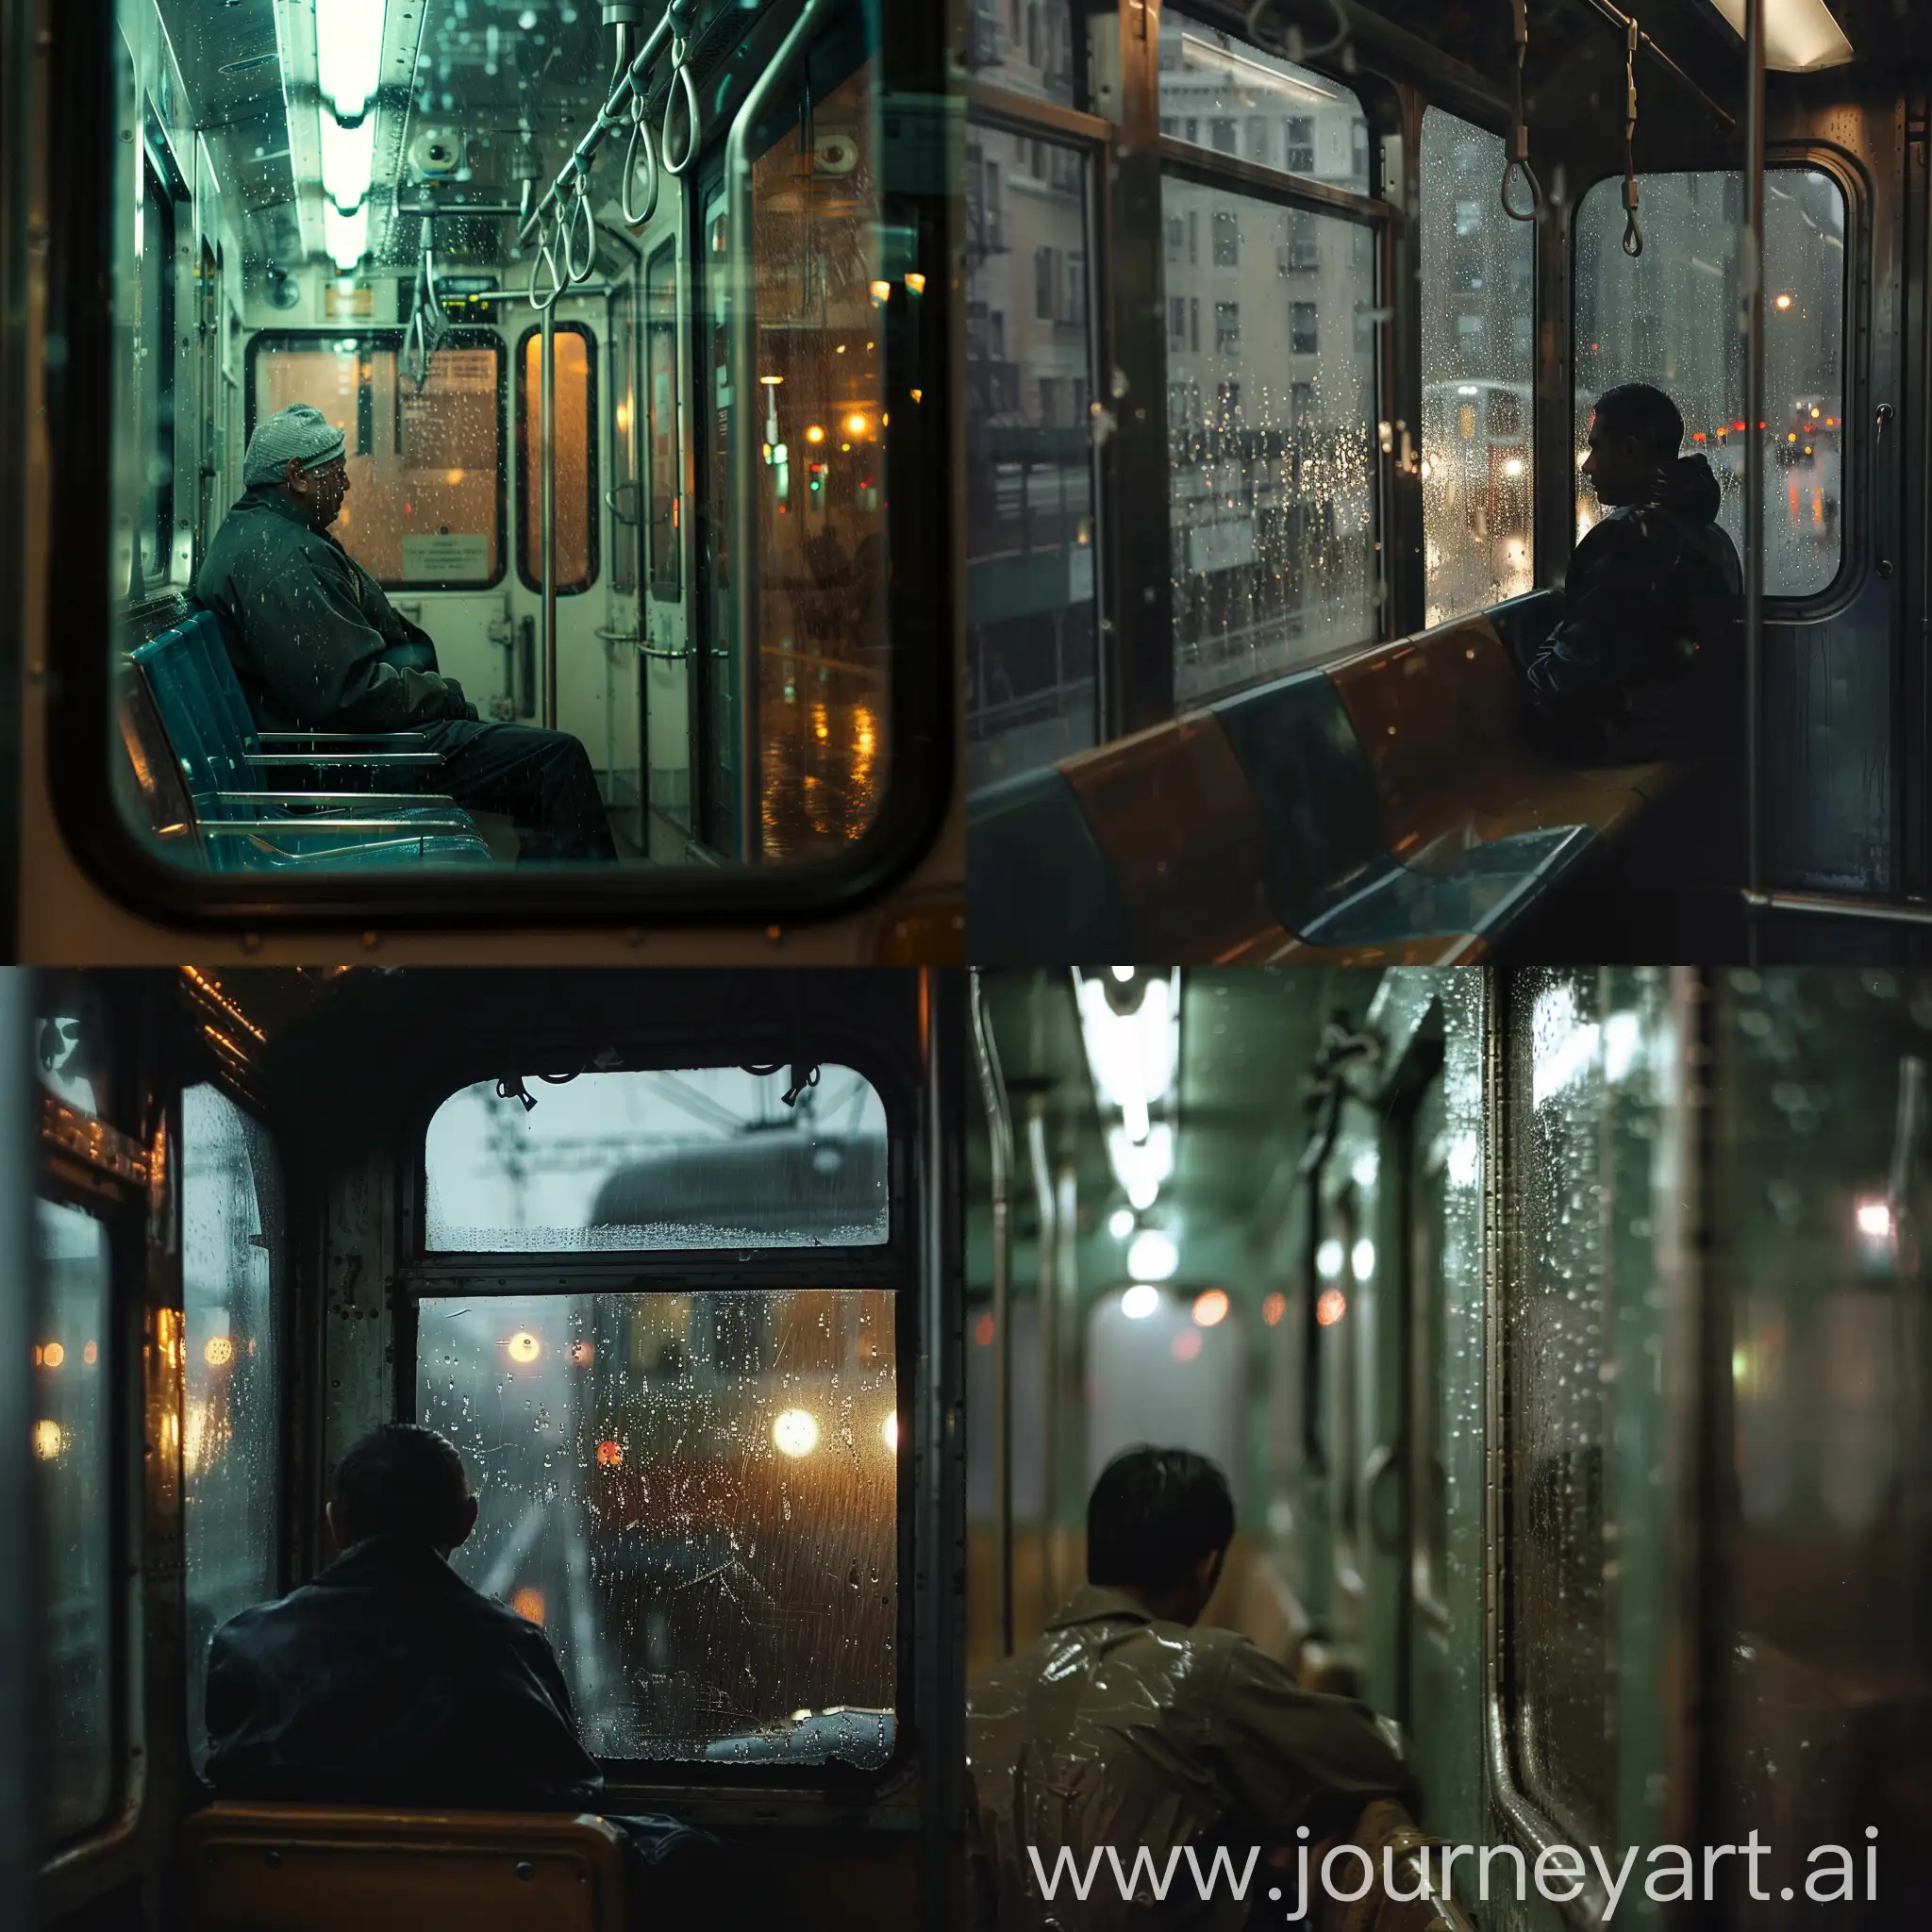 Contemplative-Man-on-Rainy-Train-Journey